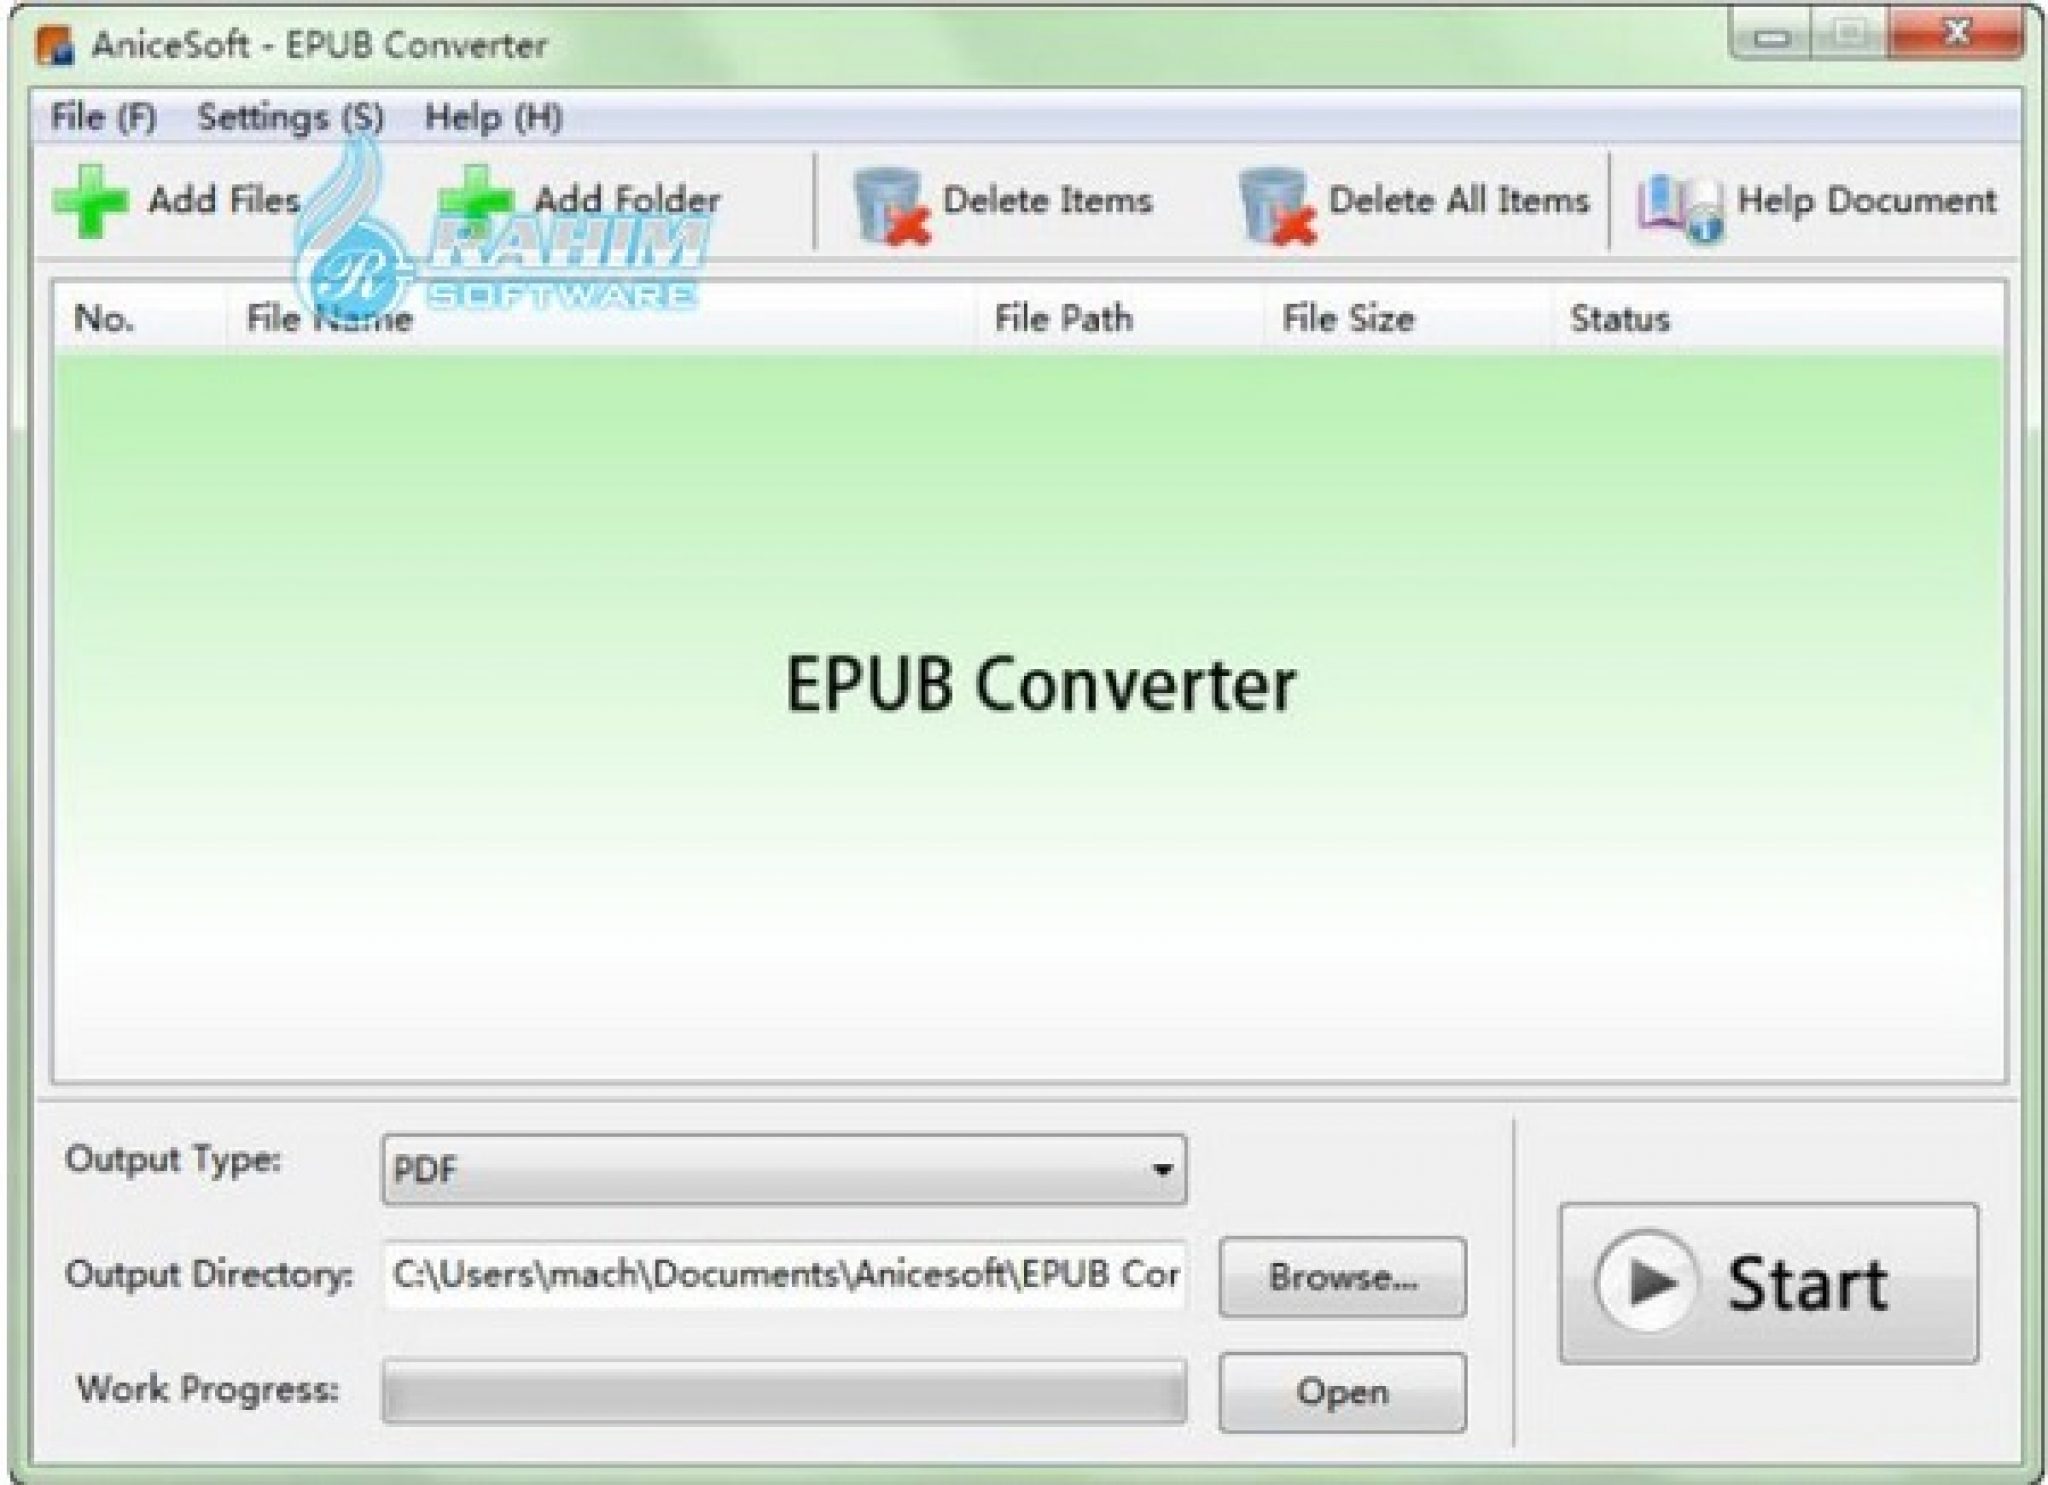 epub to pdf software free download